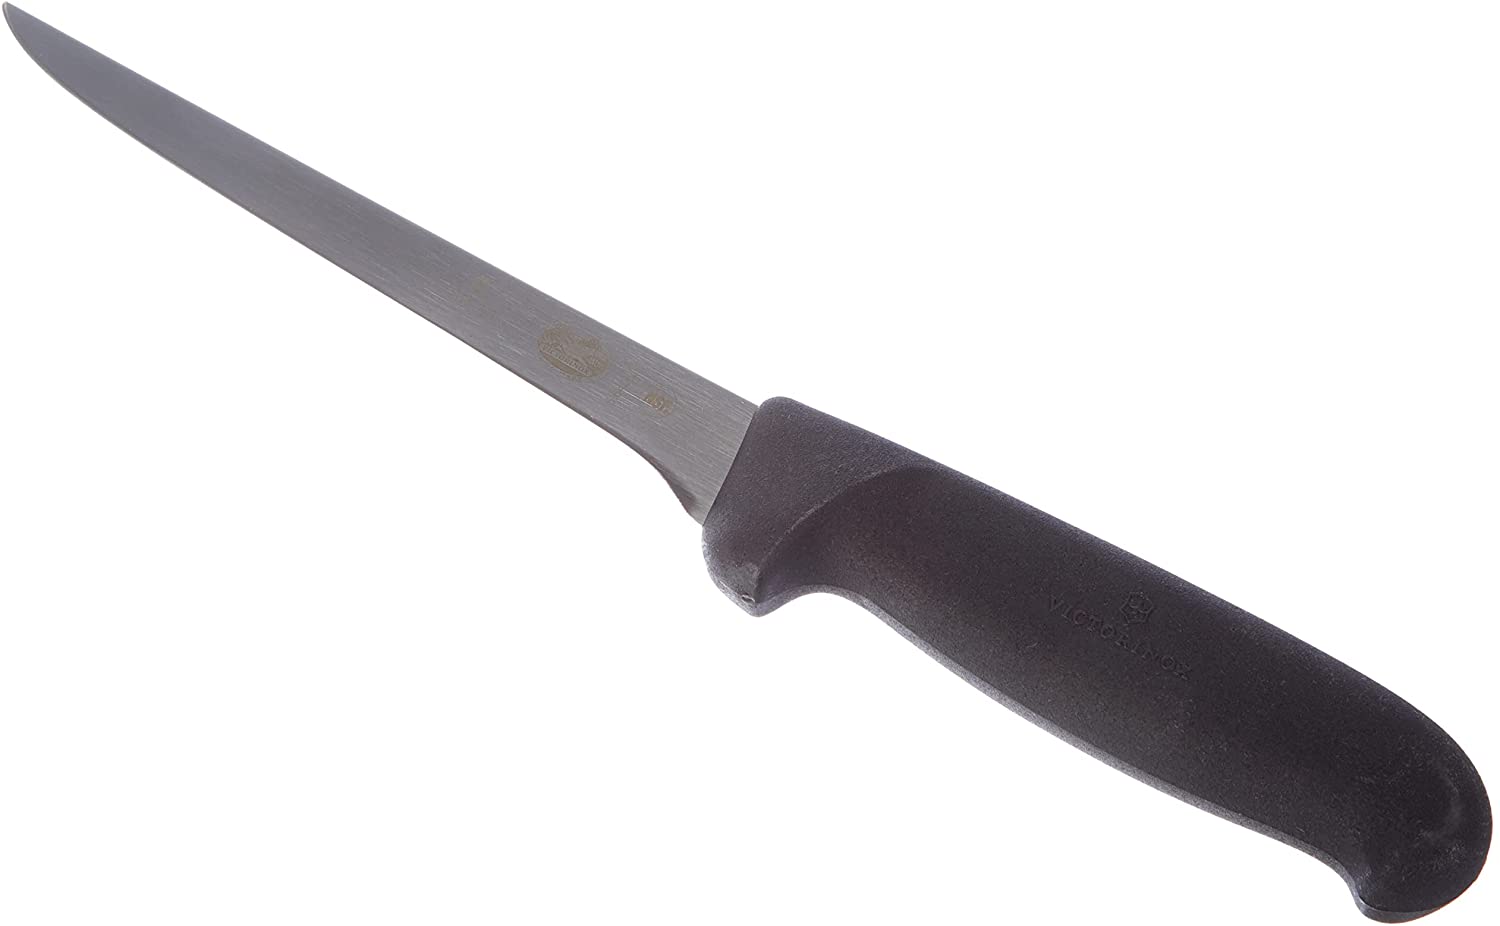 Victorinox Fibrox Chef\'s Knife, Boning Knife, Extra Sharp Blade, Stainless Steel, Dishwasher Safe, Swiss Made